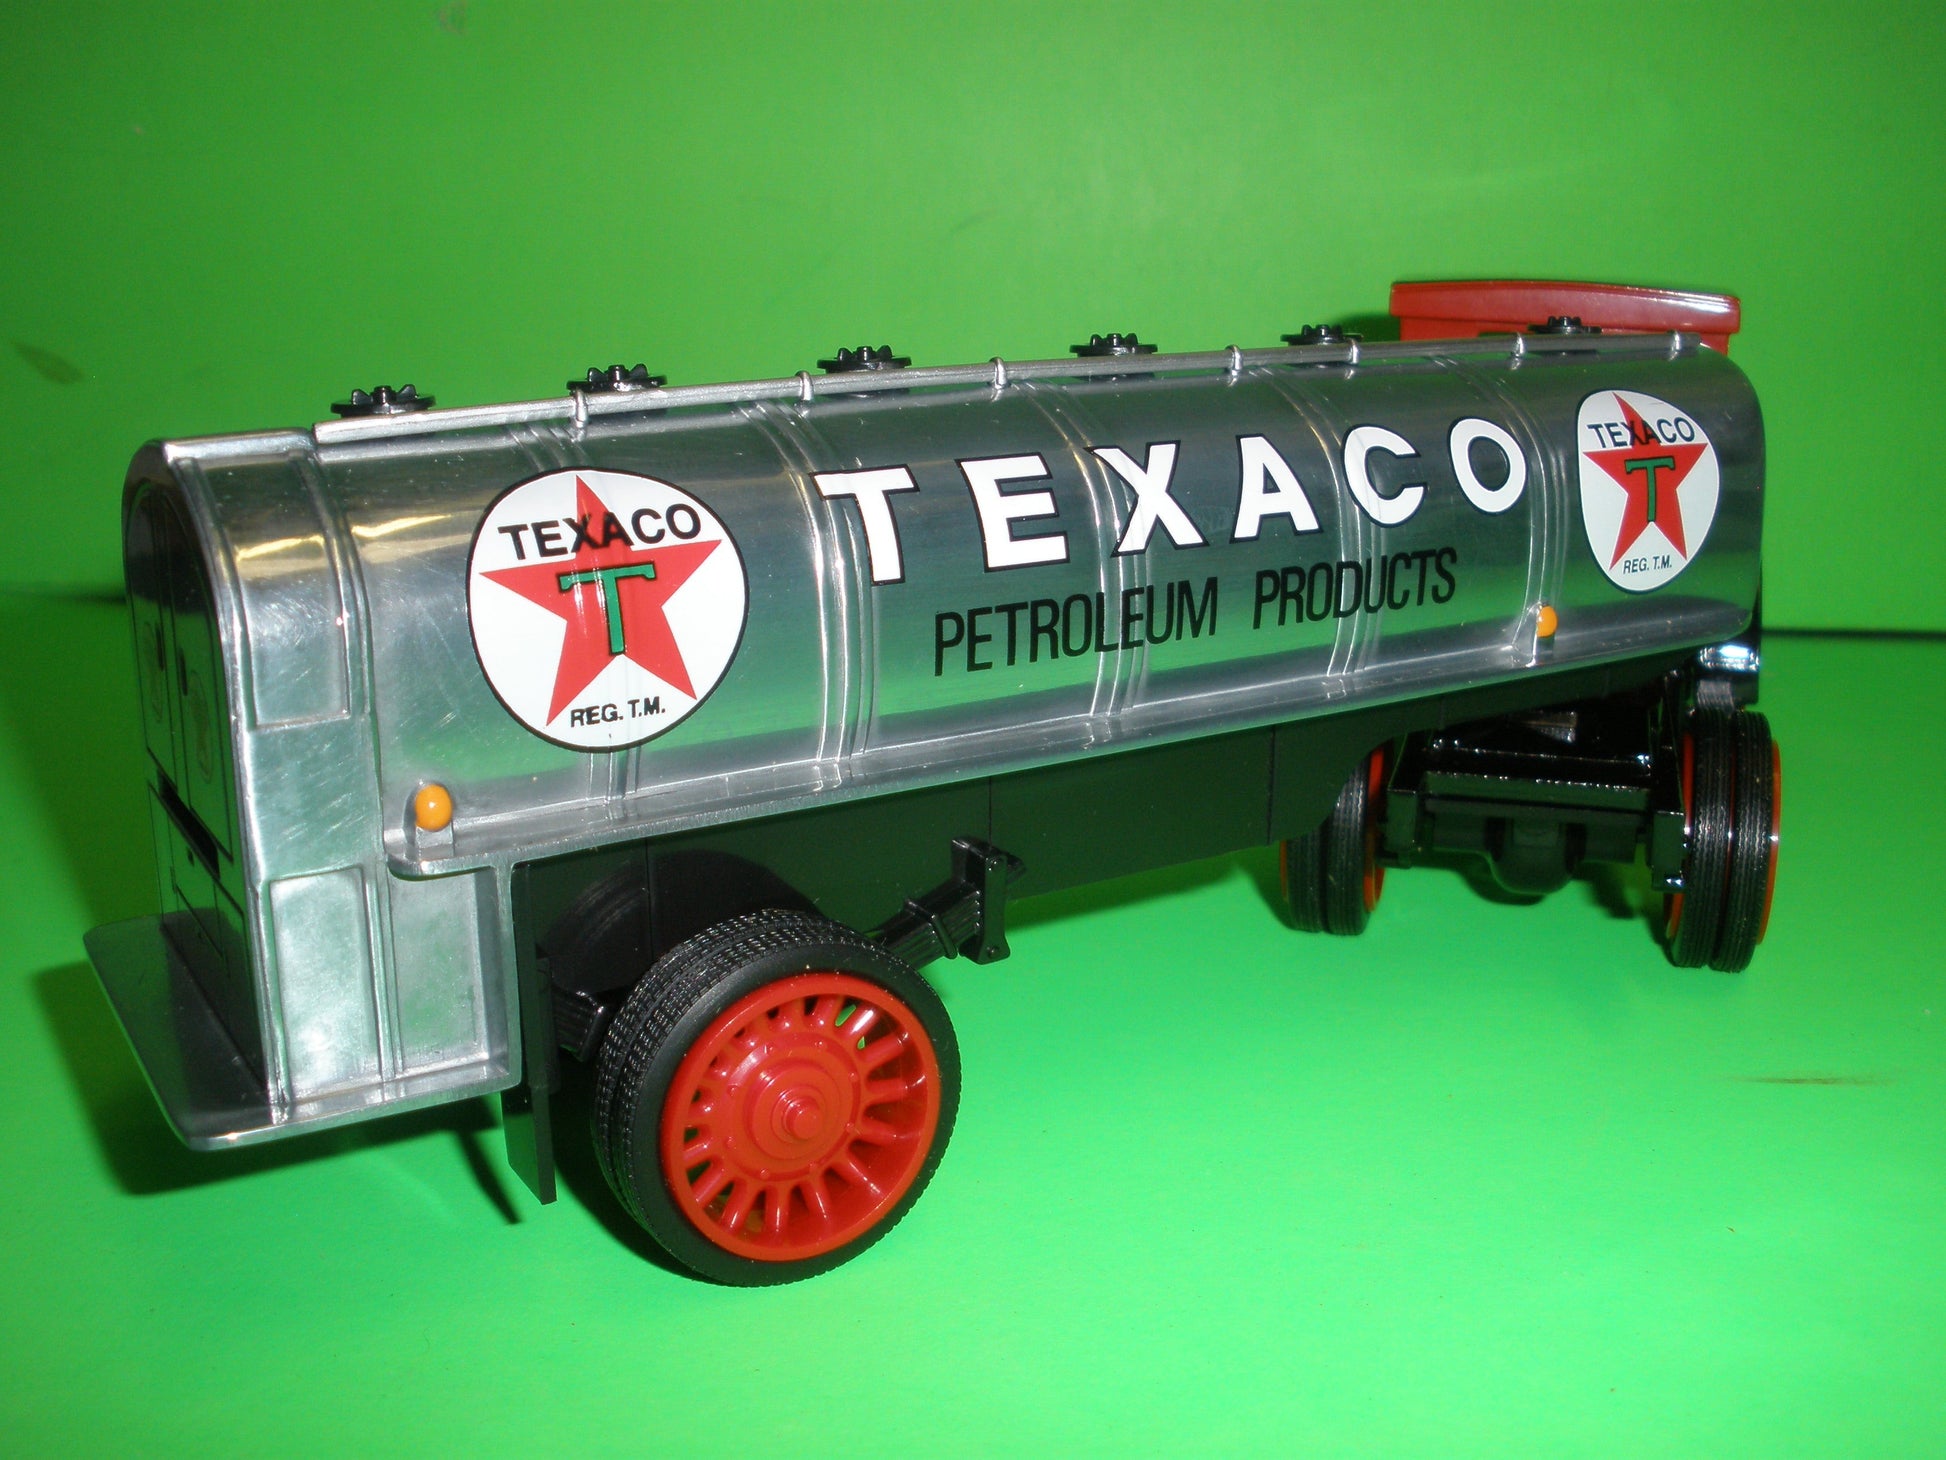 Texaco 1920 Pierce Arrow Tanker Truck Special Edition